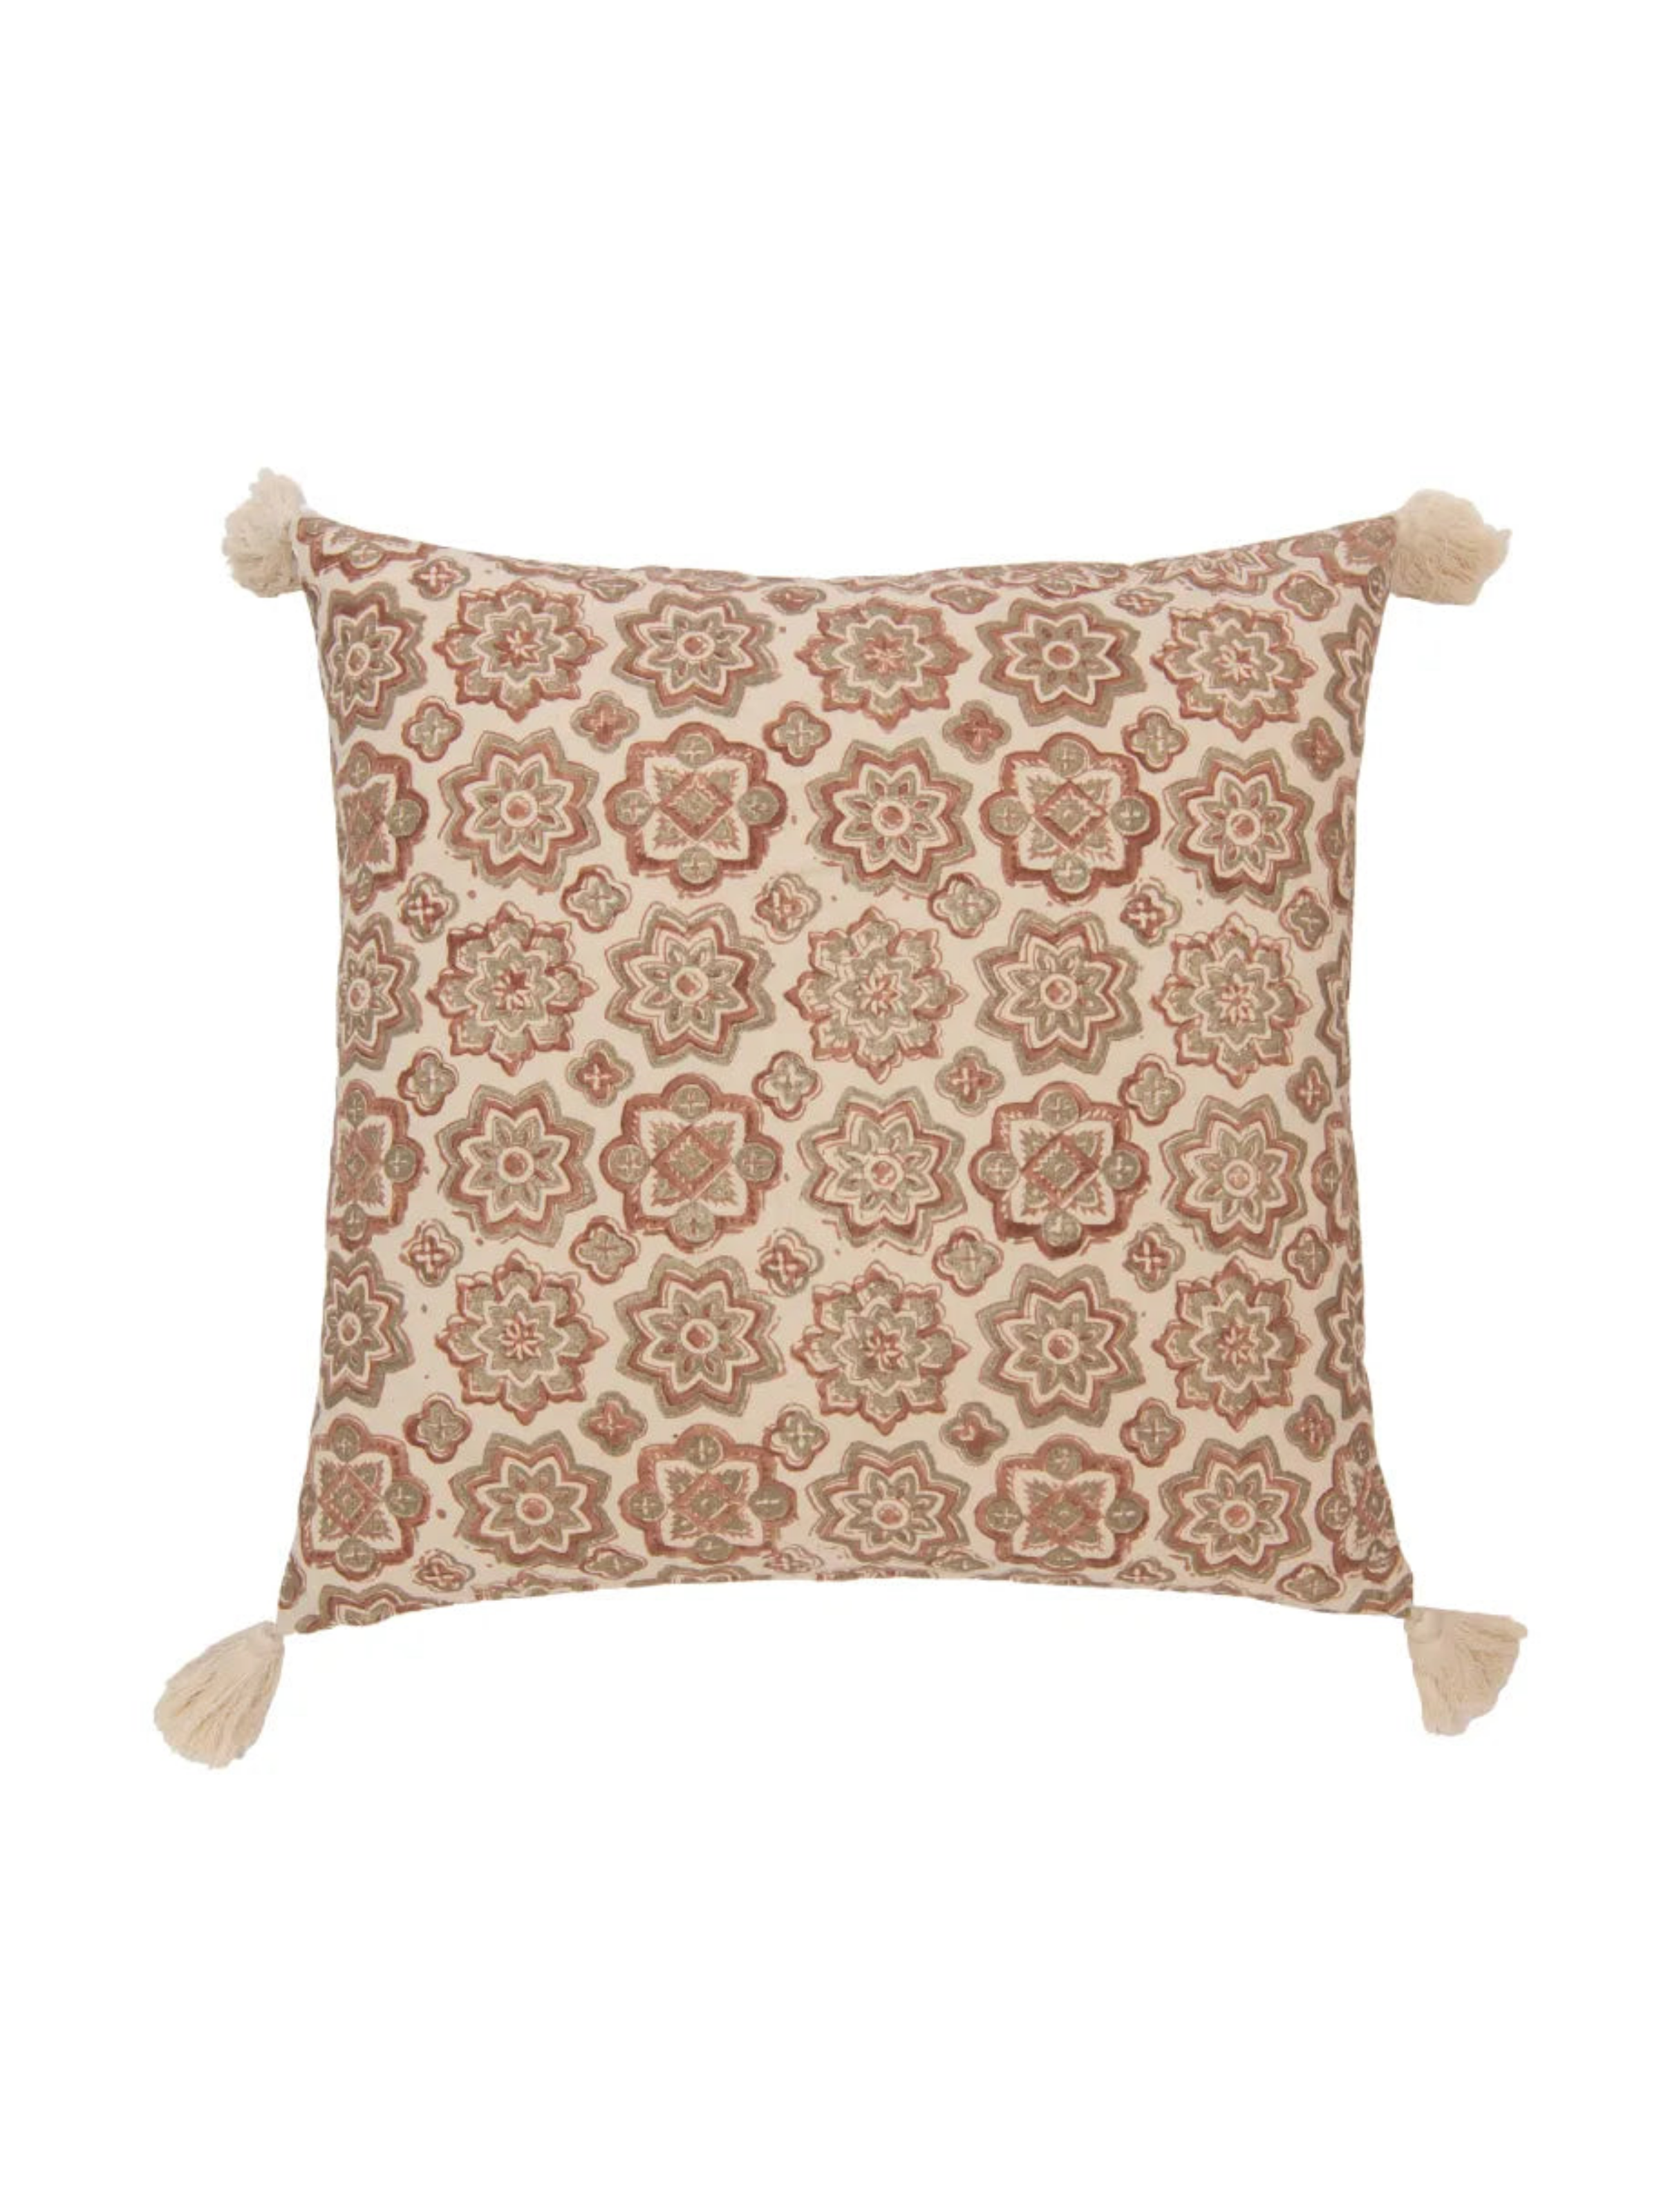 Zanzibar Grande Star Decorative Pillow